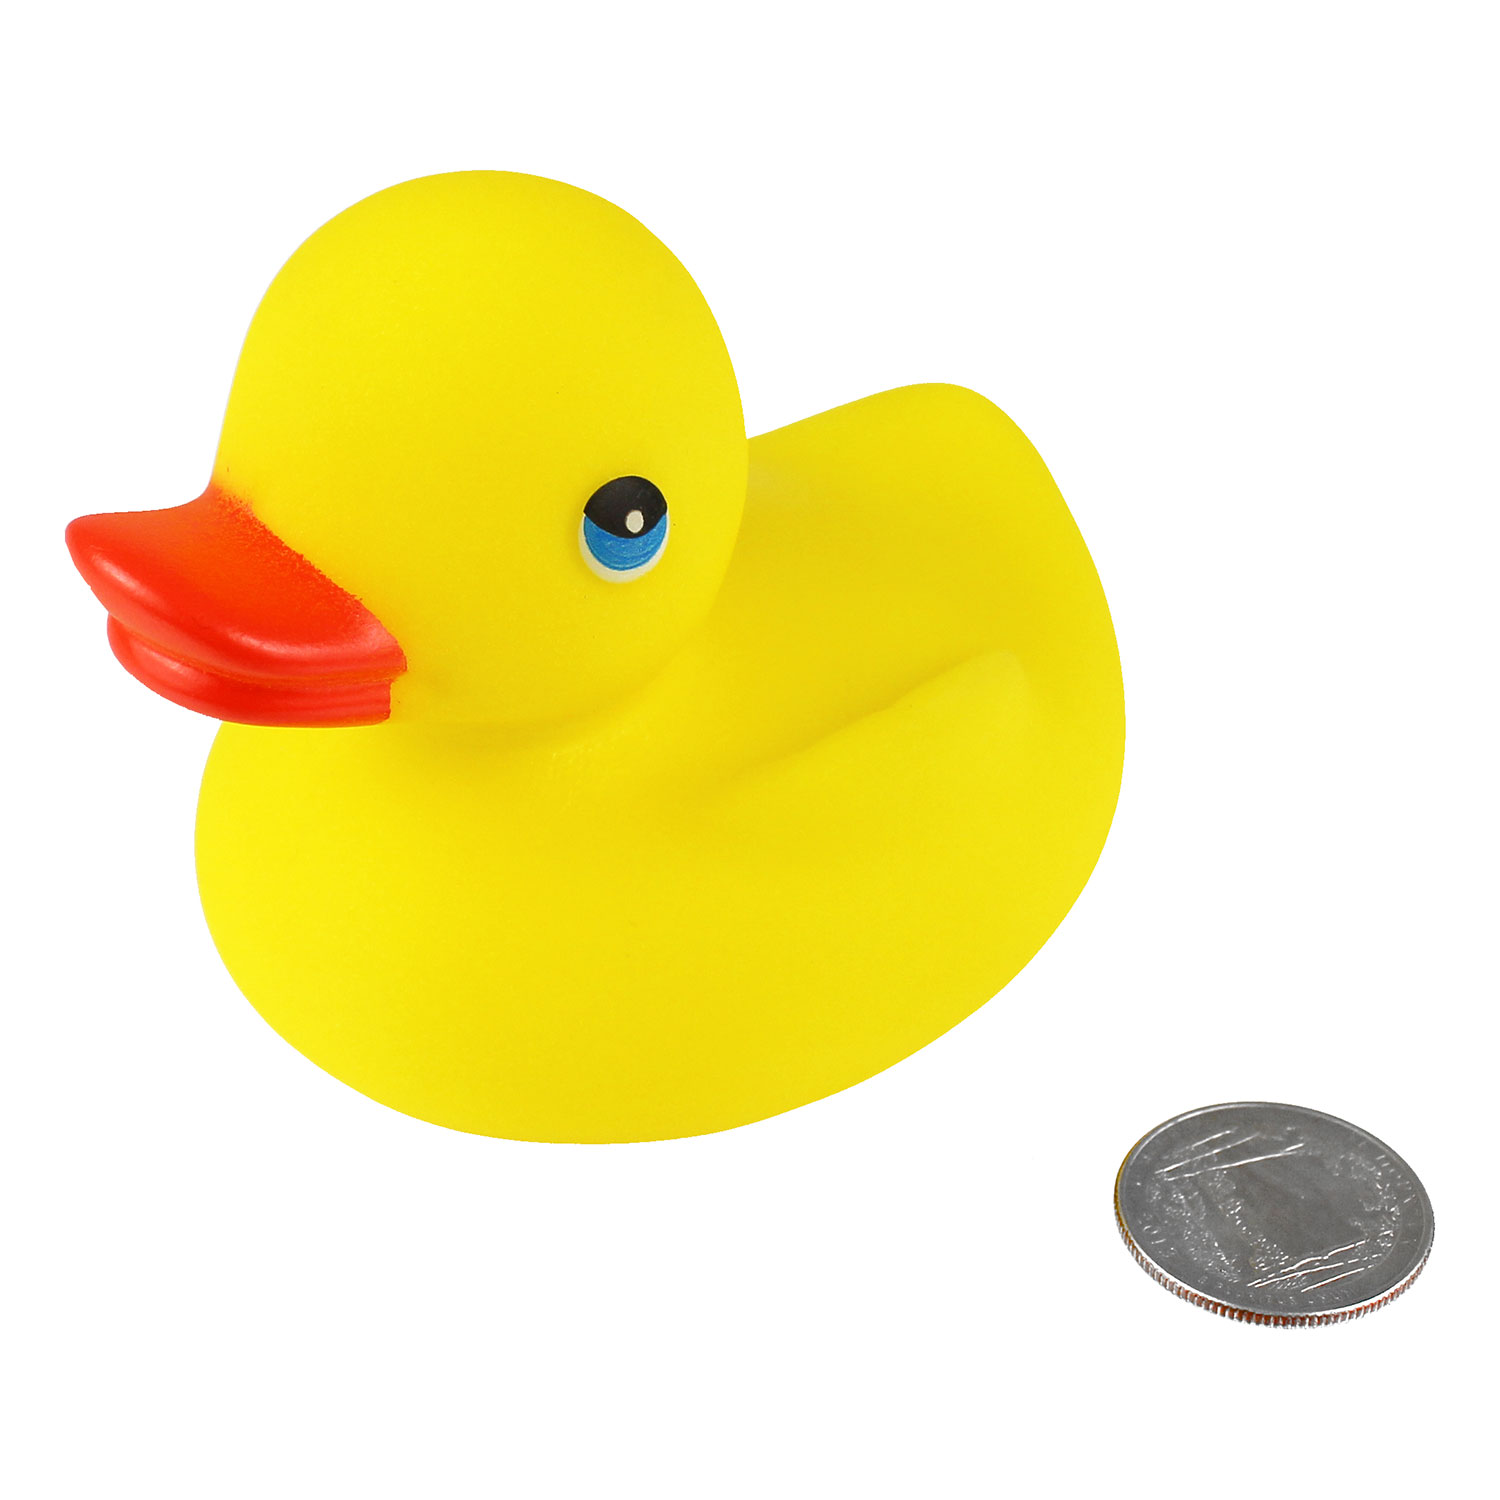 Rubber Ducks - 3 1/2 Inch - 12 Count: Rebecca's Toys & Prizes